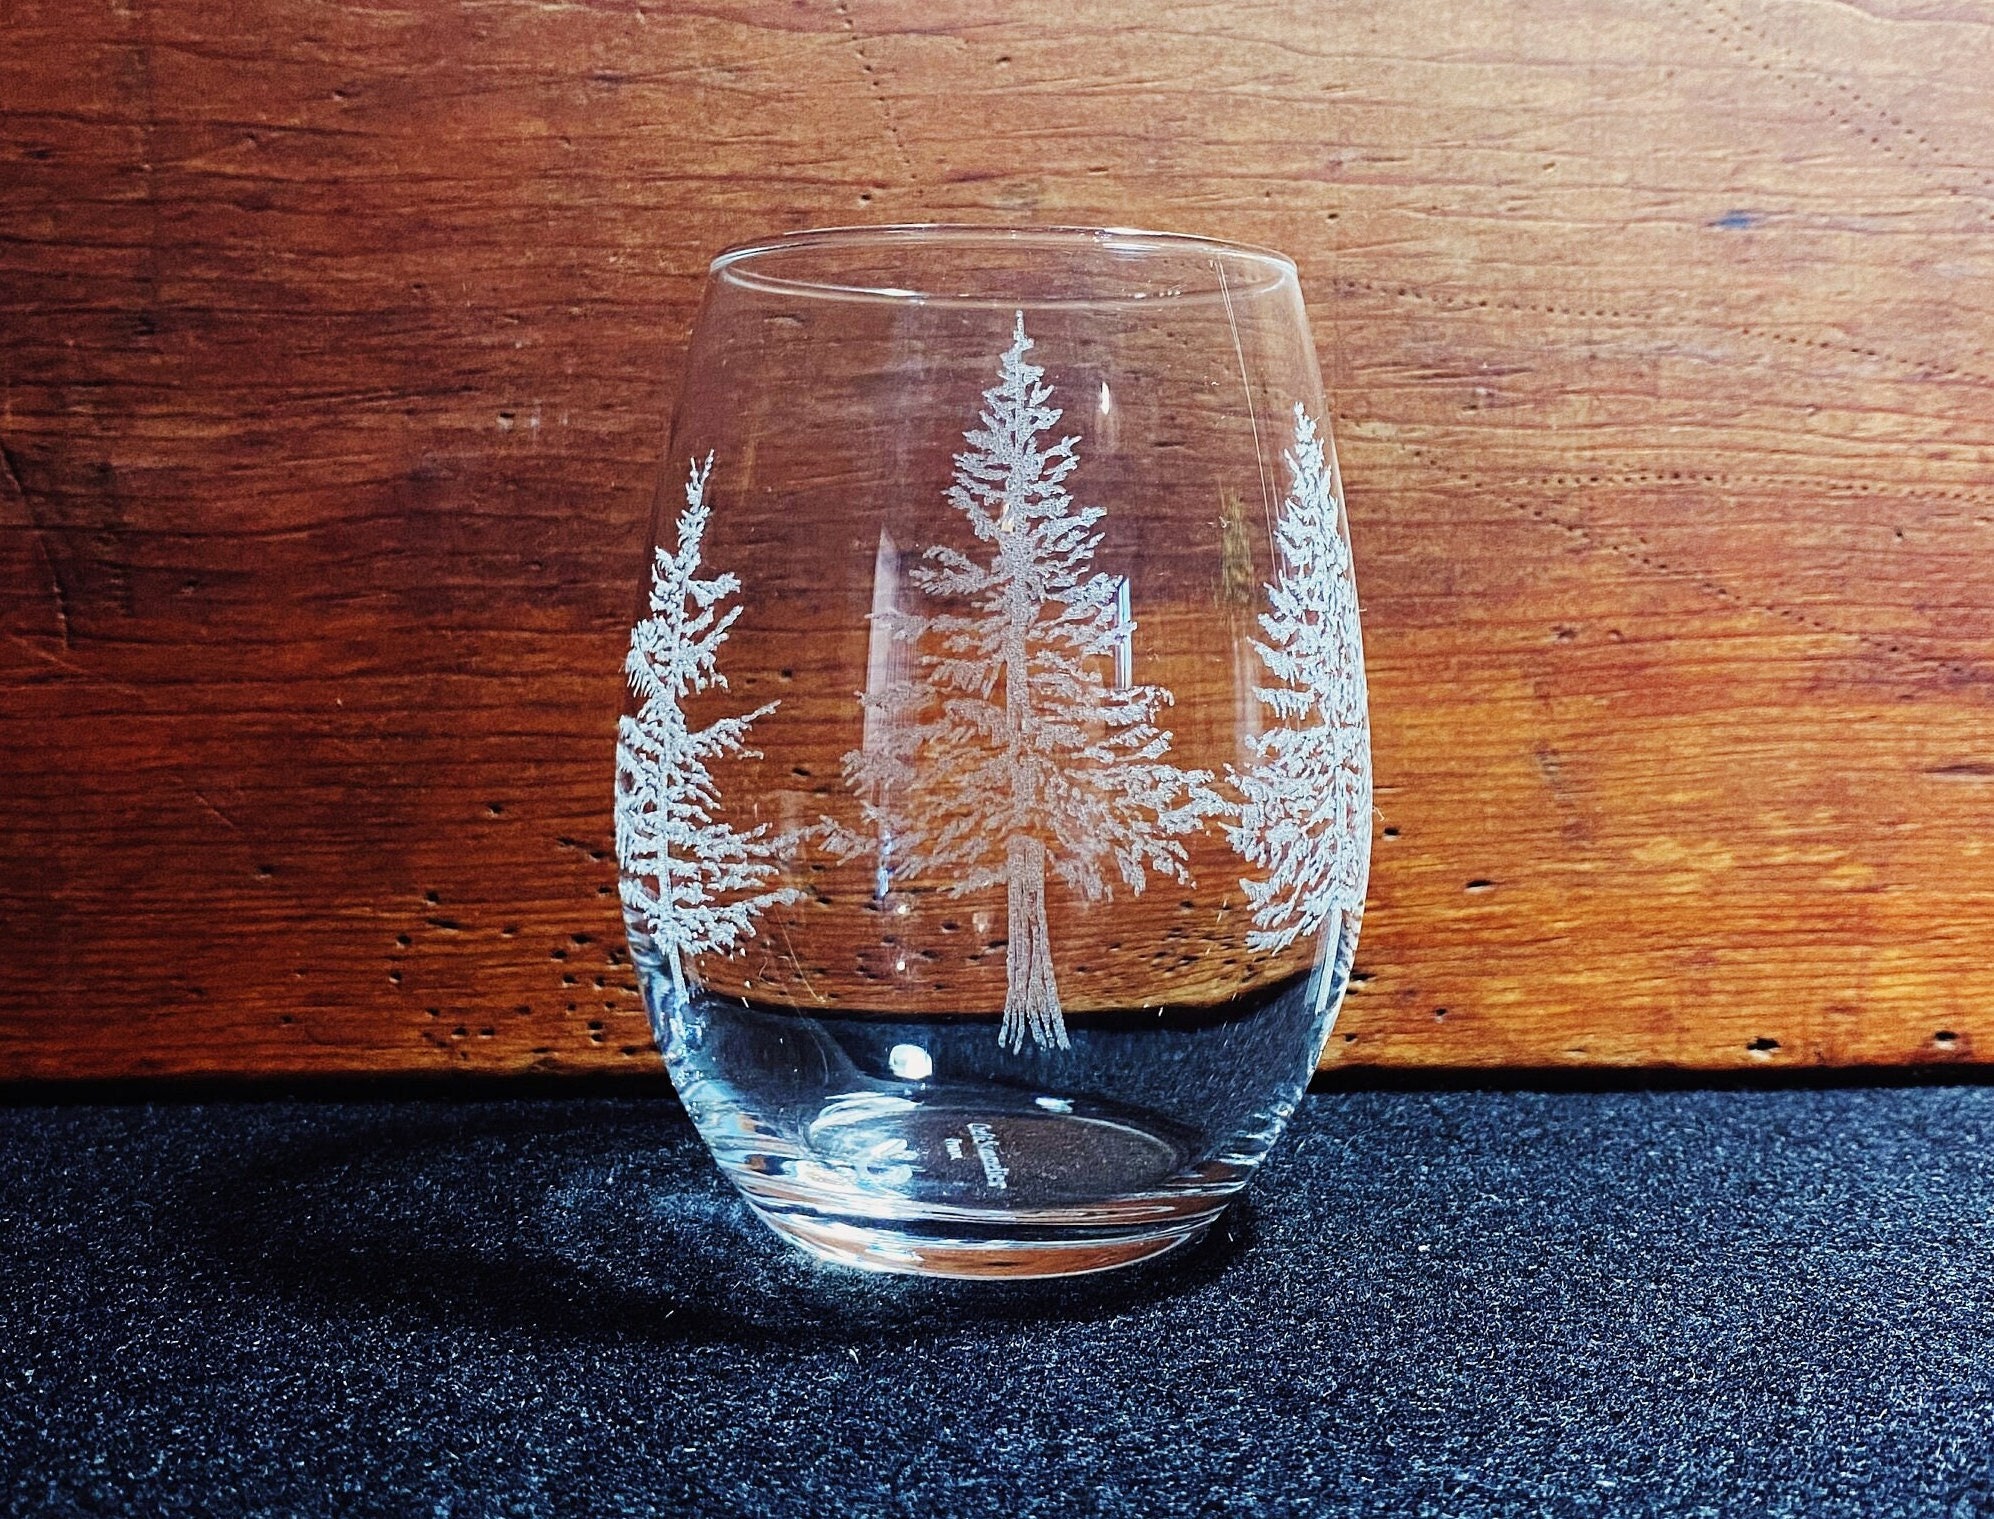 Mid Pines Yeti Stemless Wine Glass – Pine Needles Mid Pines